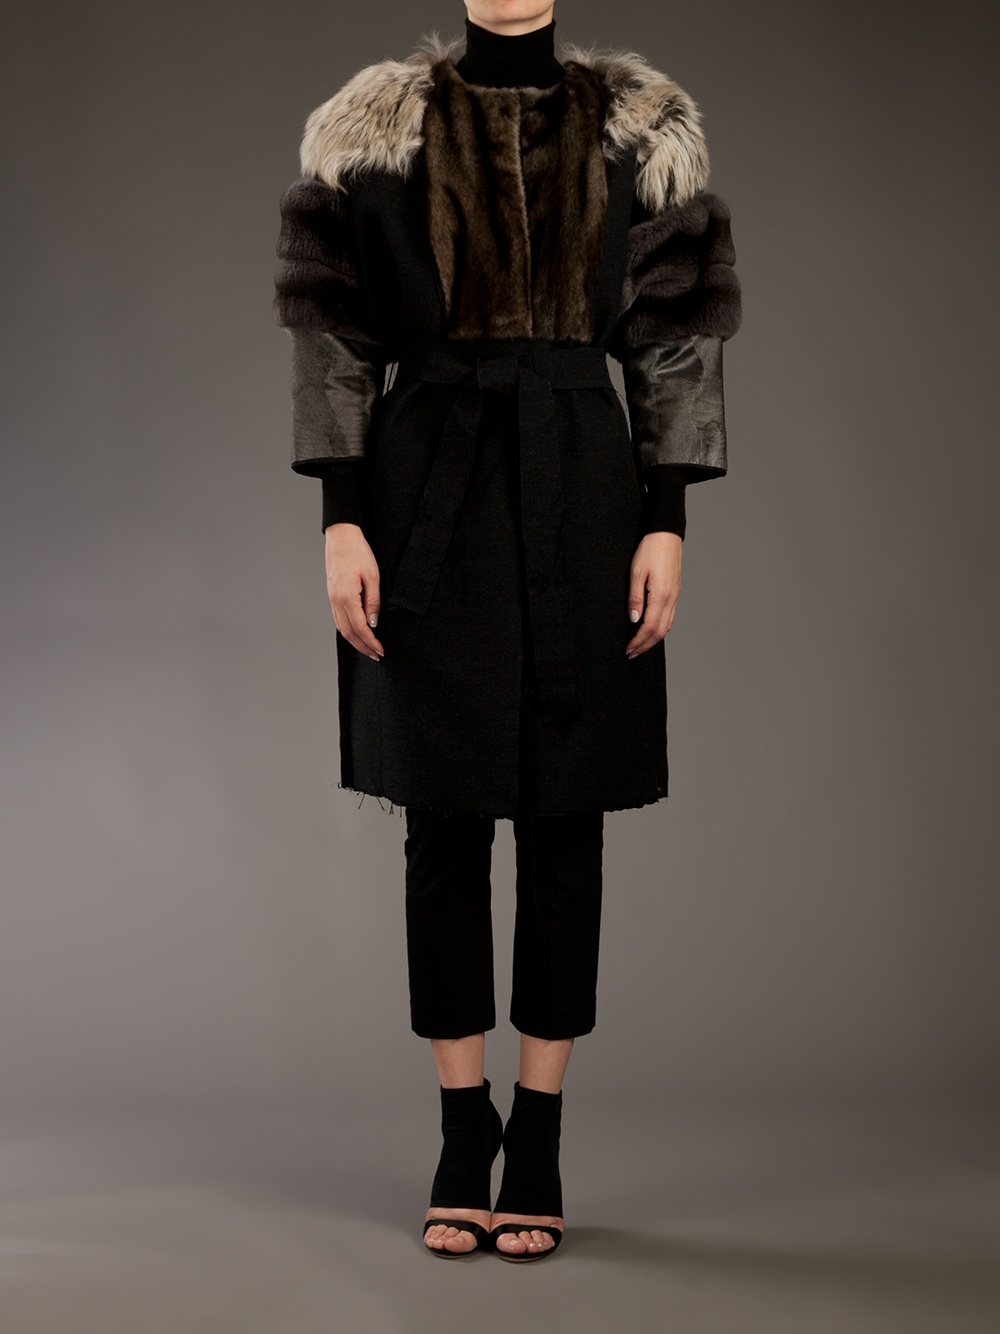 Lyst - Lanvin Fur Coat in Black